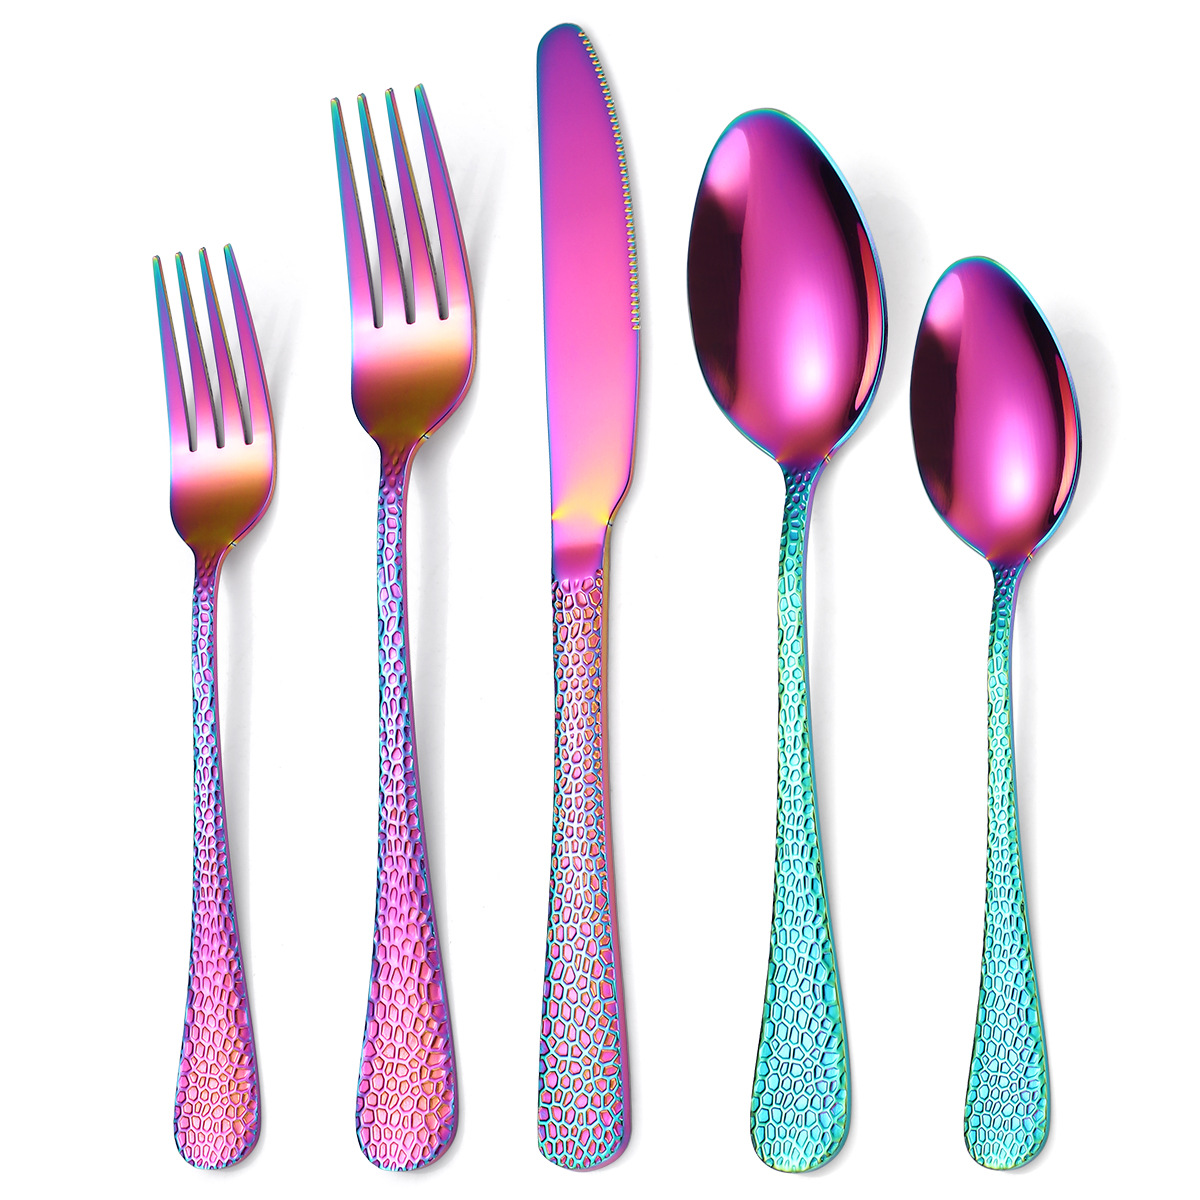 5 Pcs Stainless Steel Flatware Knife Fork Spoon Set Snake Skin Pattern Gold Plated Cutlery Set for Wedding